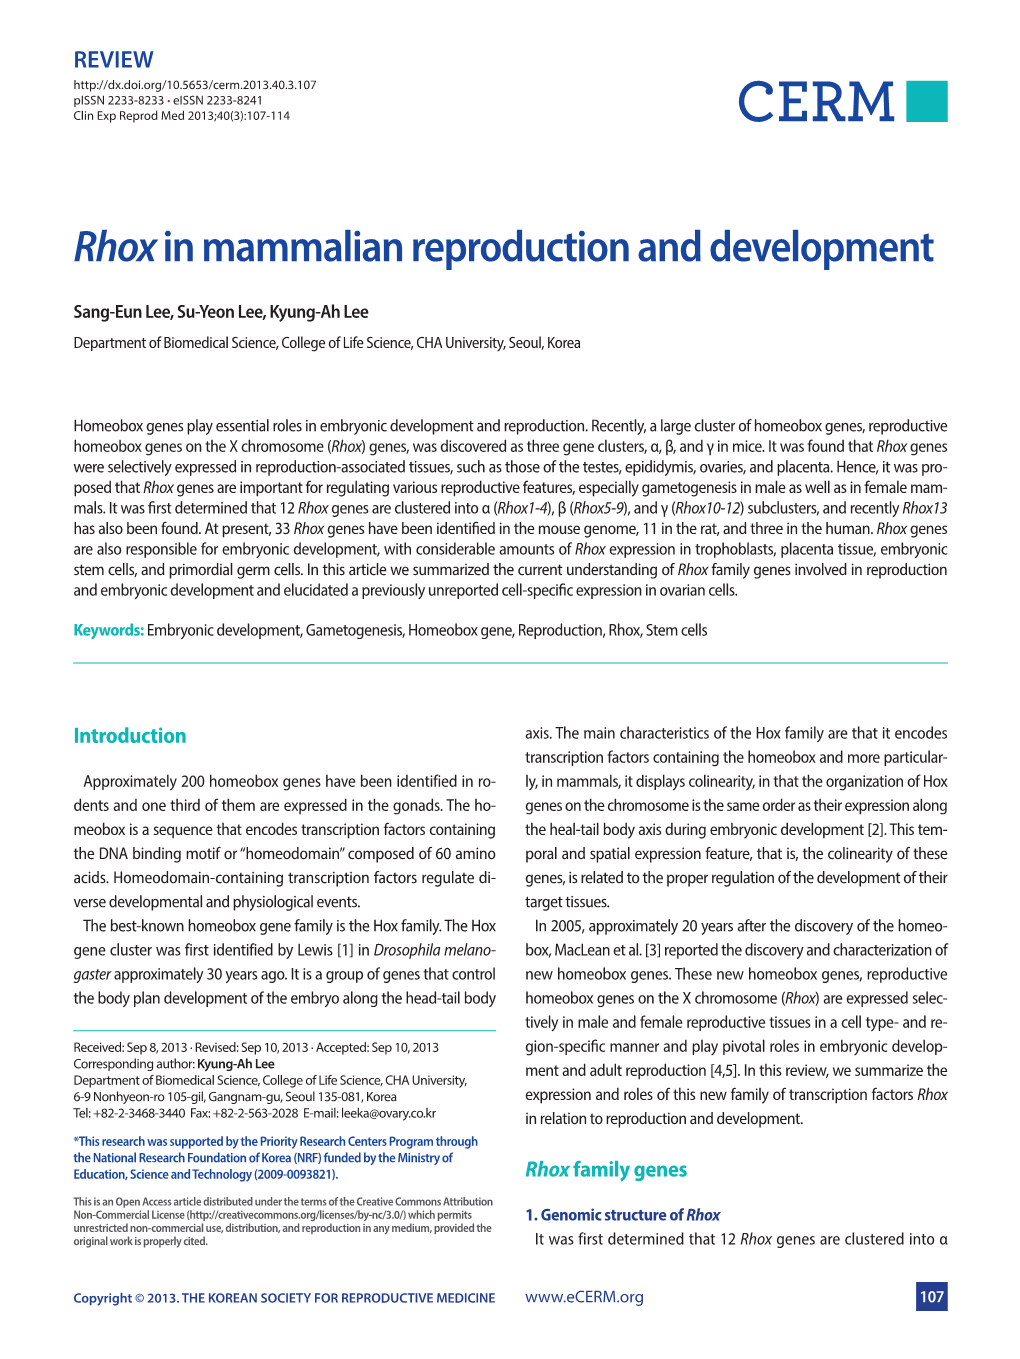 Rhoxin Mammalian Reproduction and Development